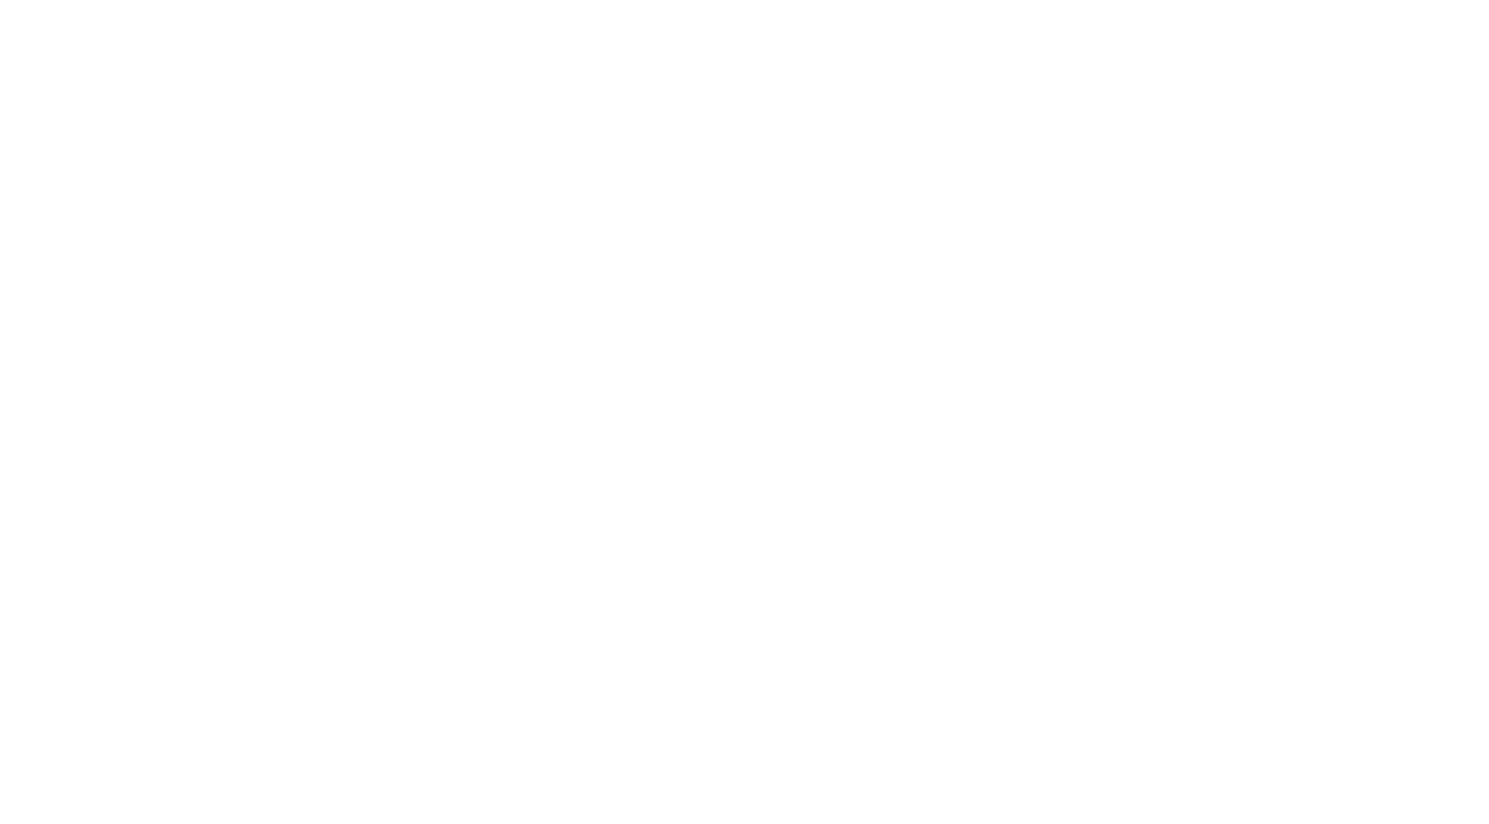 TheTokyo 2020 Olympics is in your
														hands!